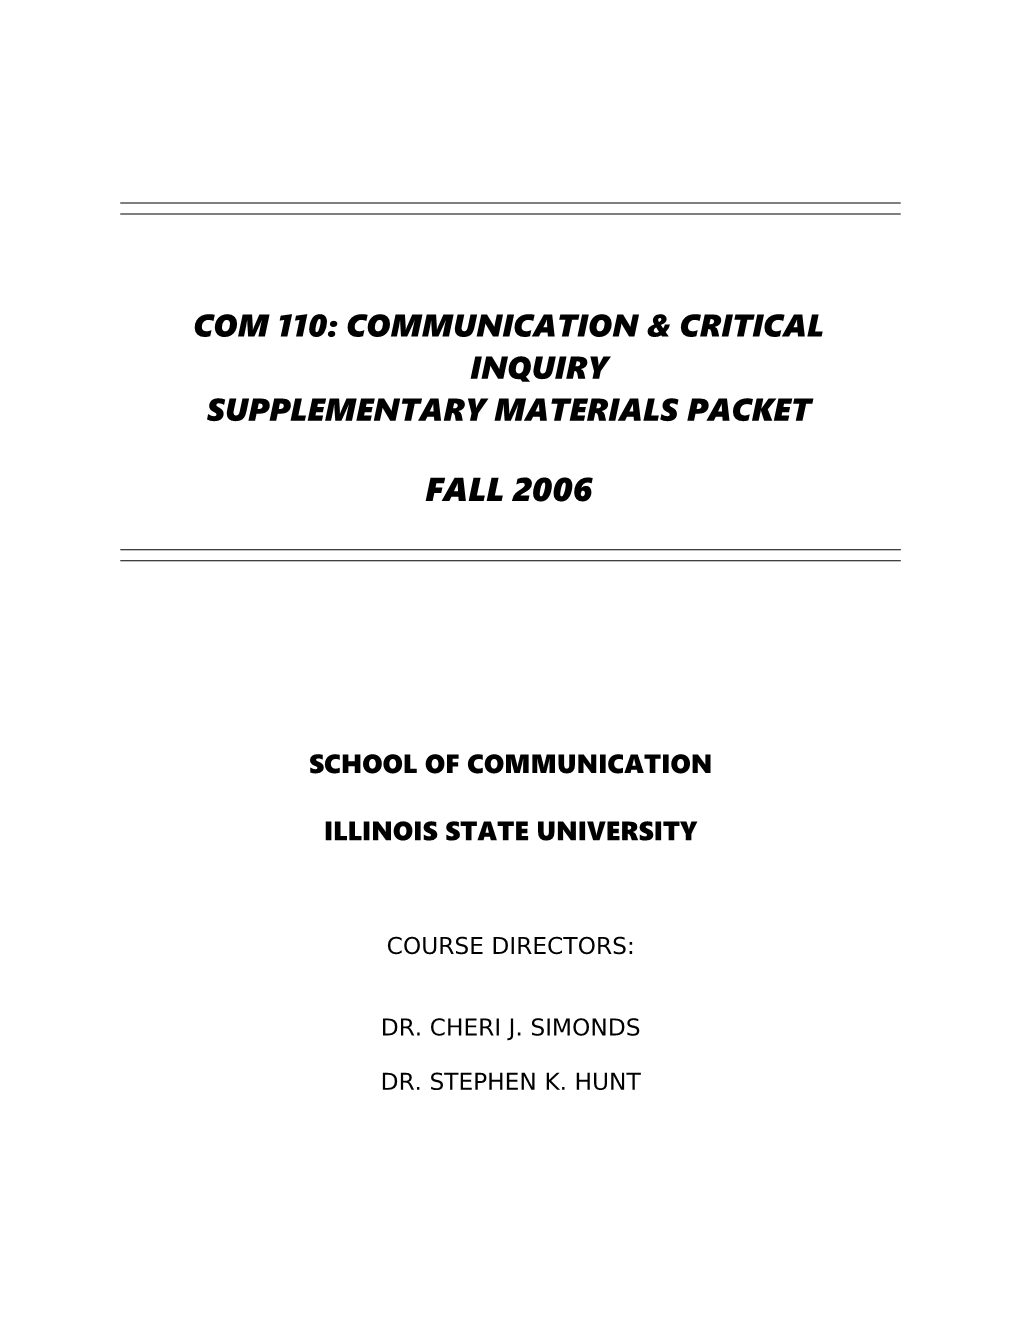 Com 110: Communication & Critical Inquiry